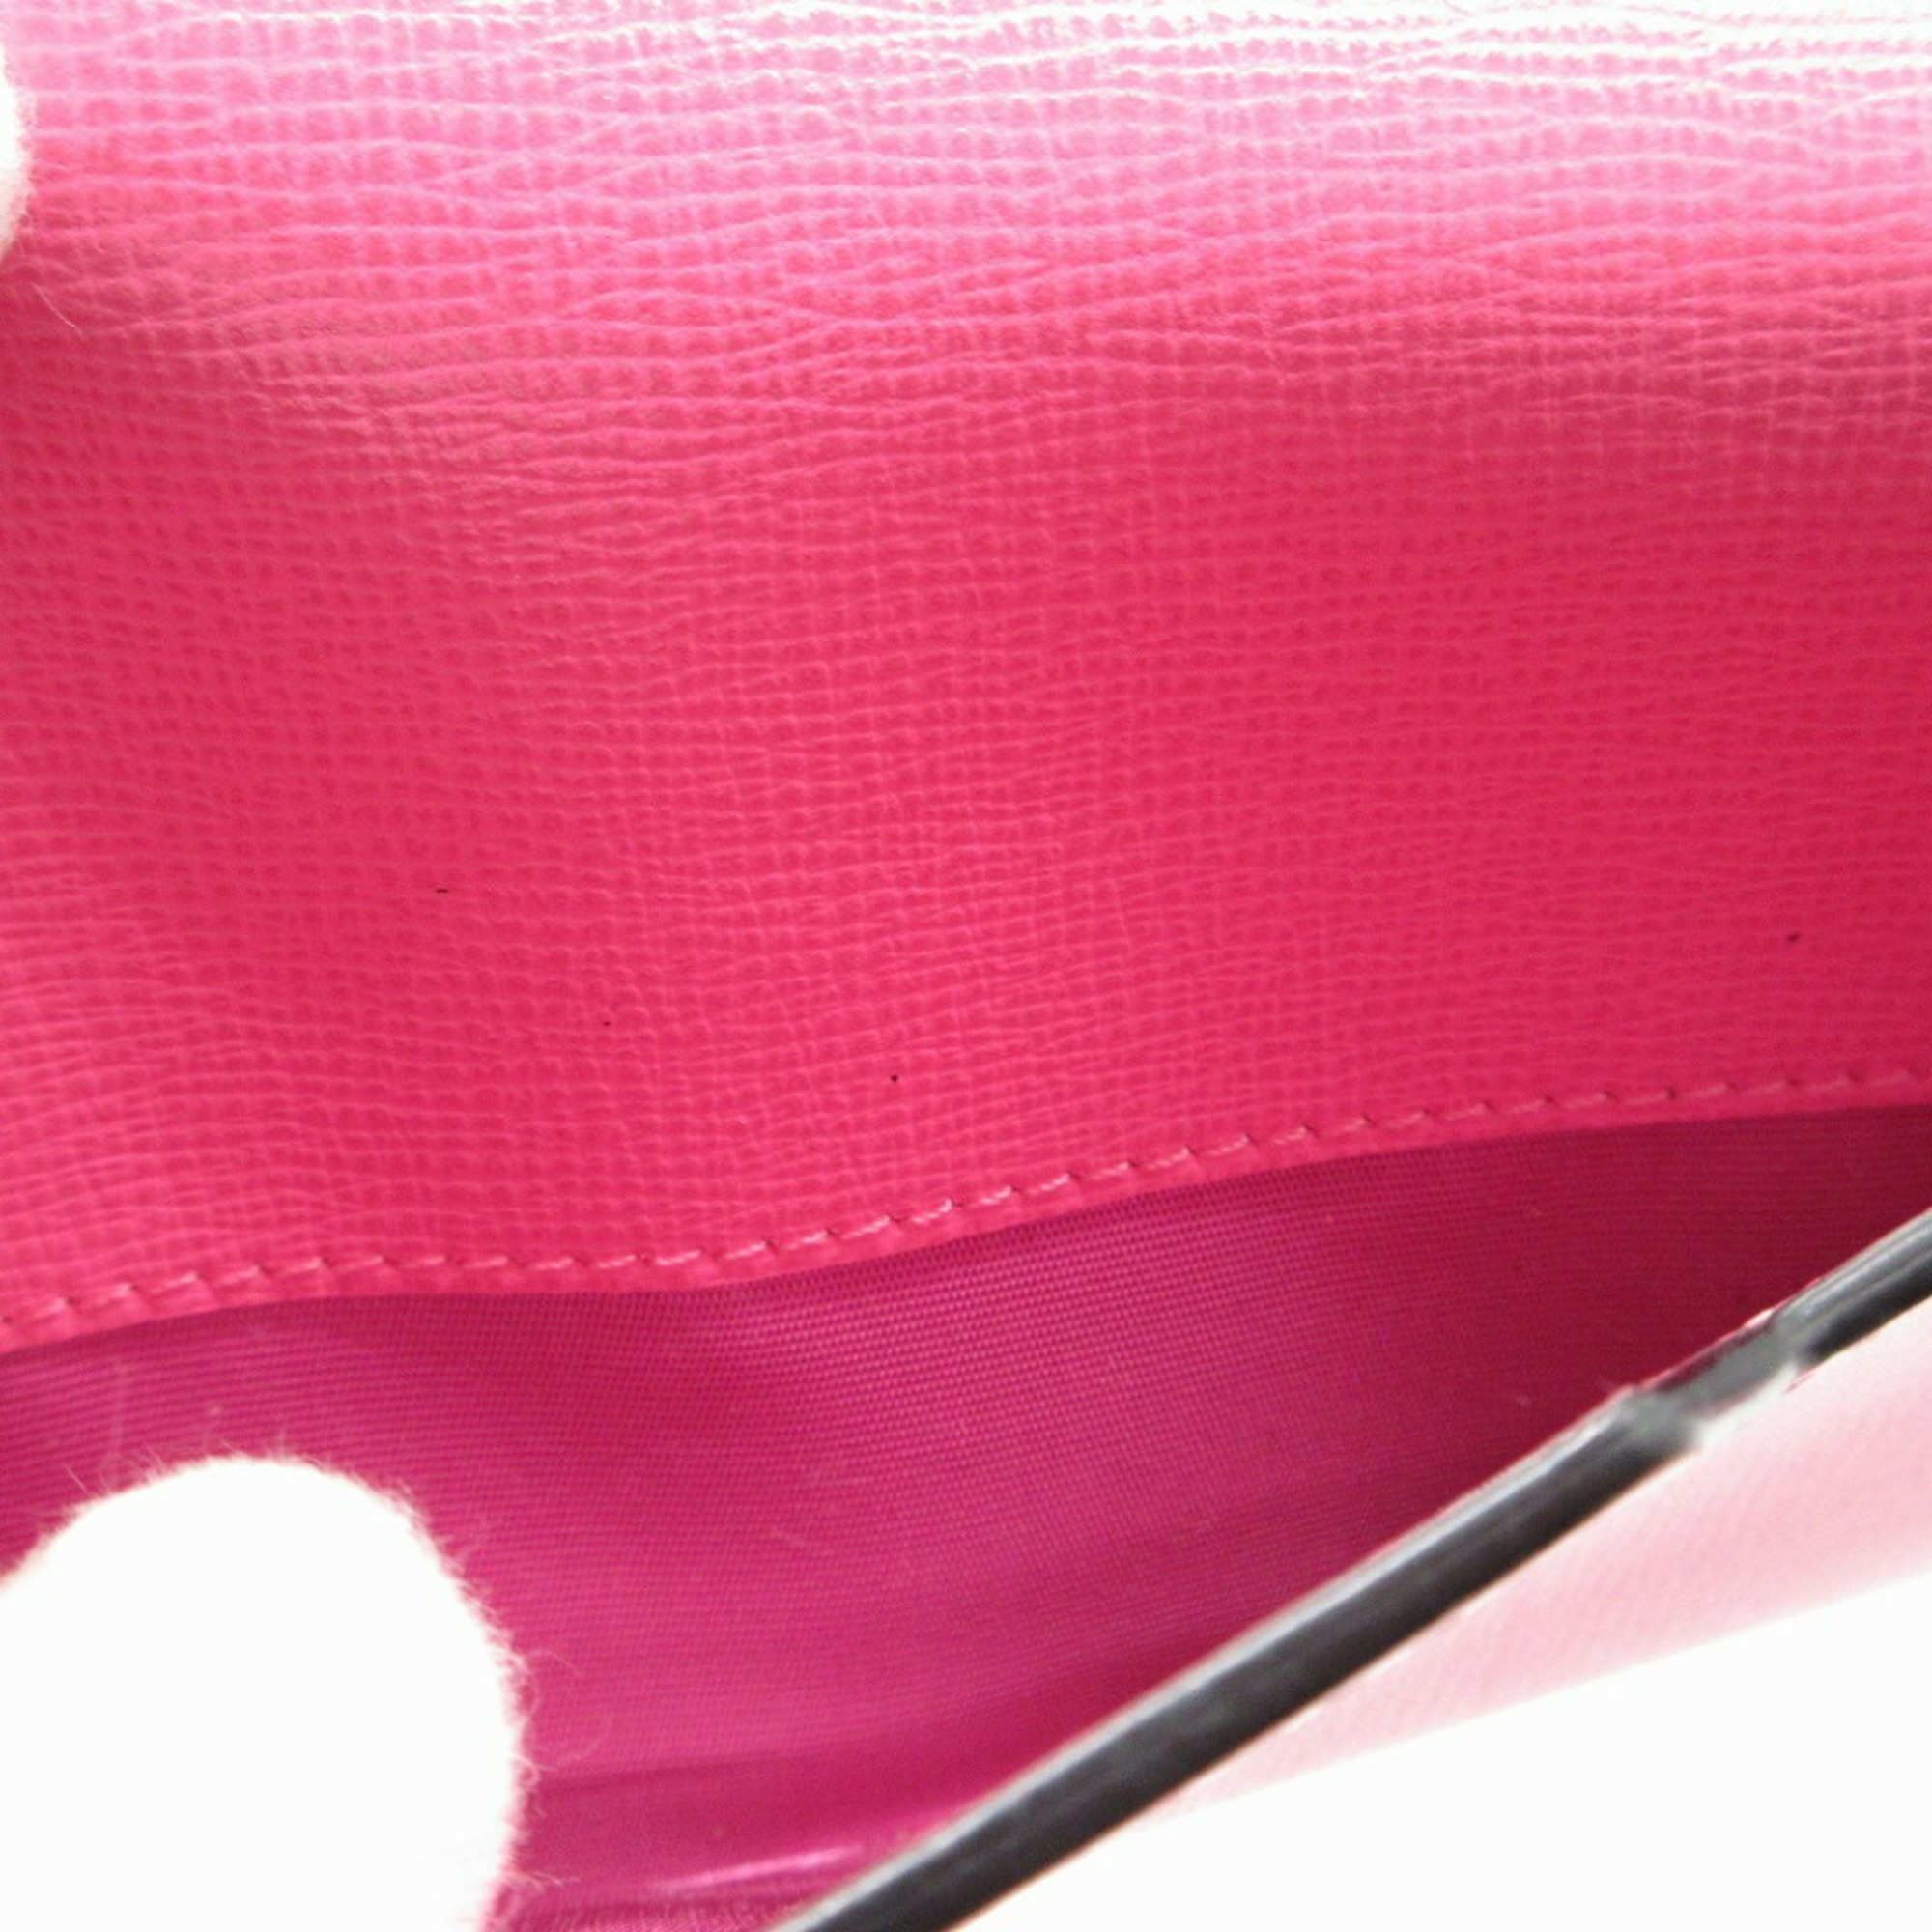 Valentino Rockstud Leather Pink Red Bi-fold Long Wallet 1259VALENTINO GARAVANI